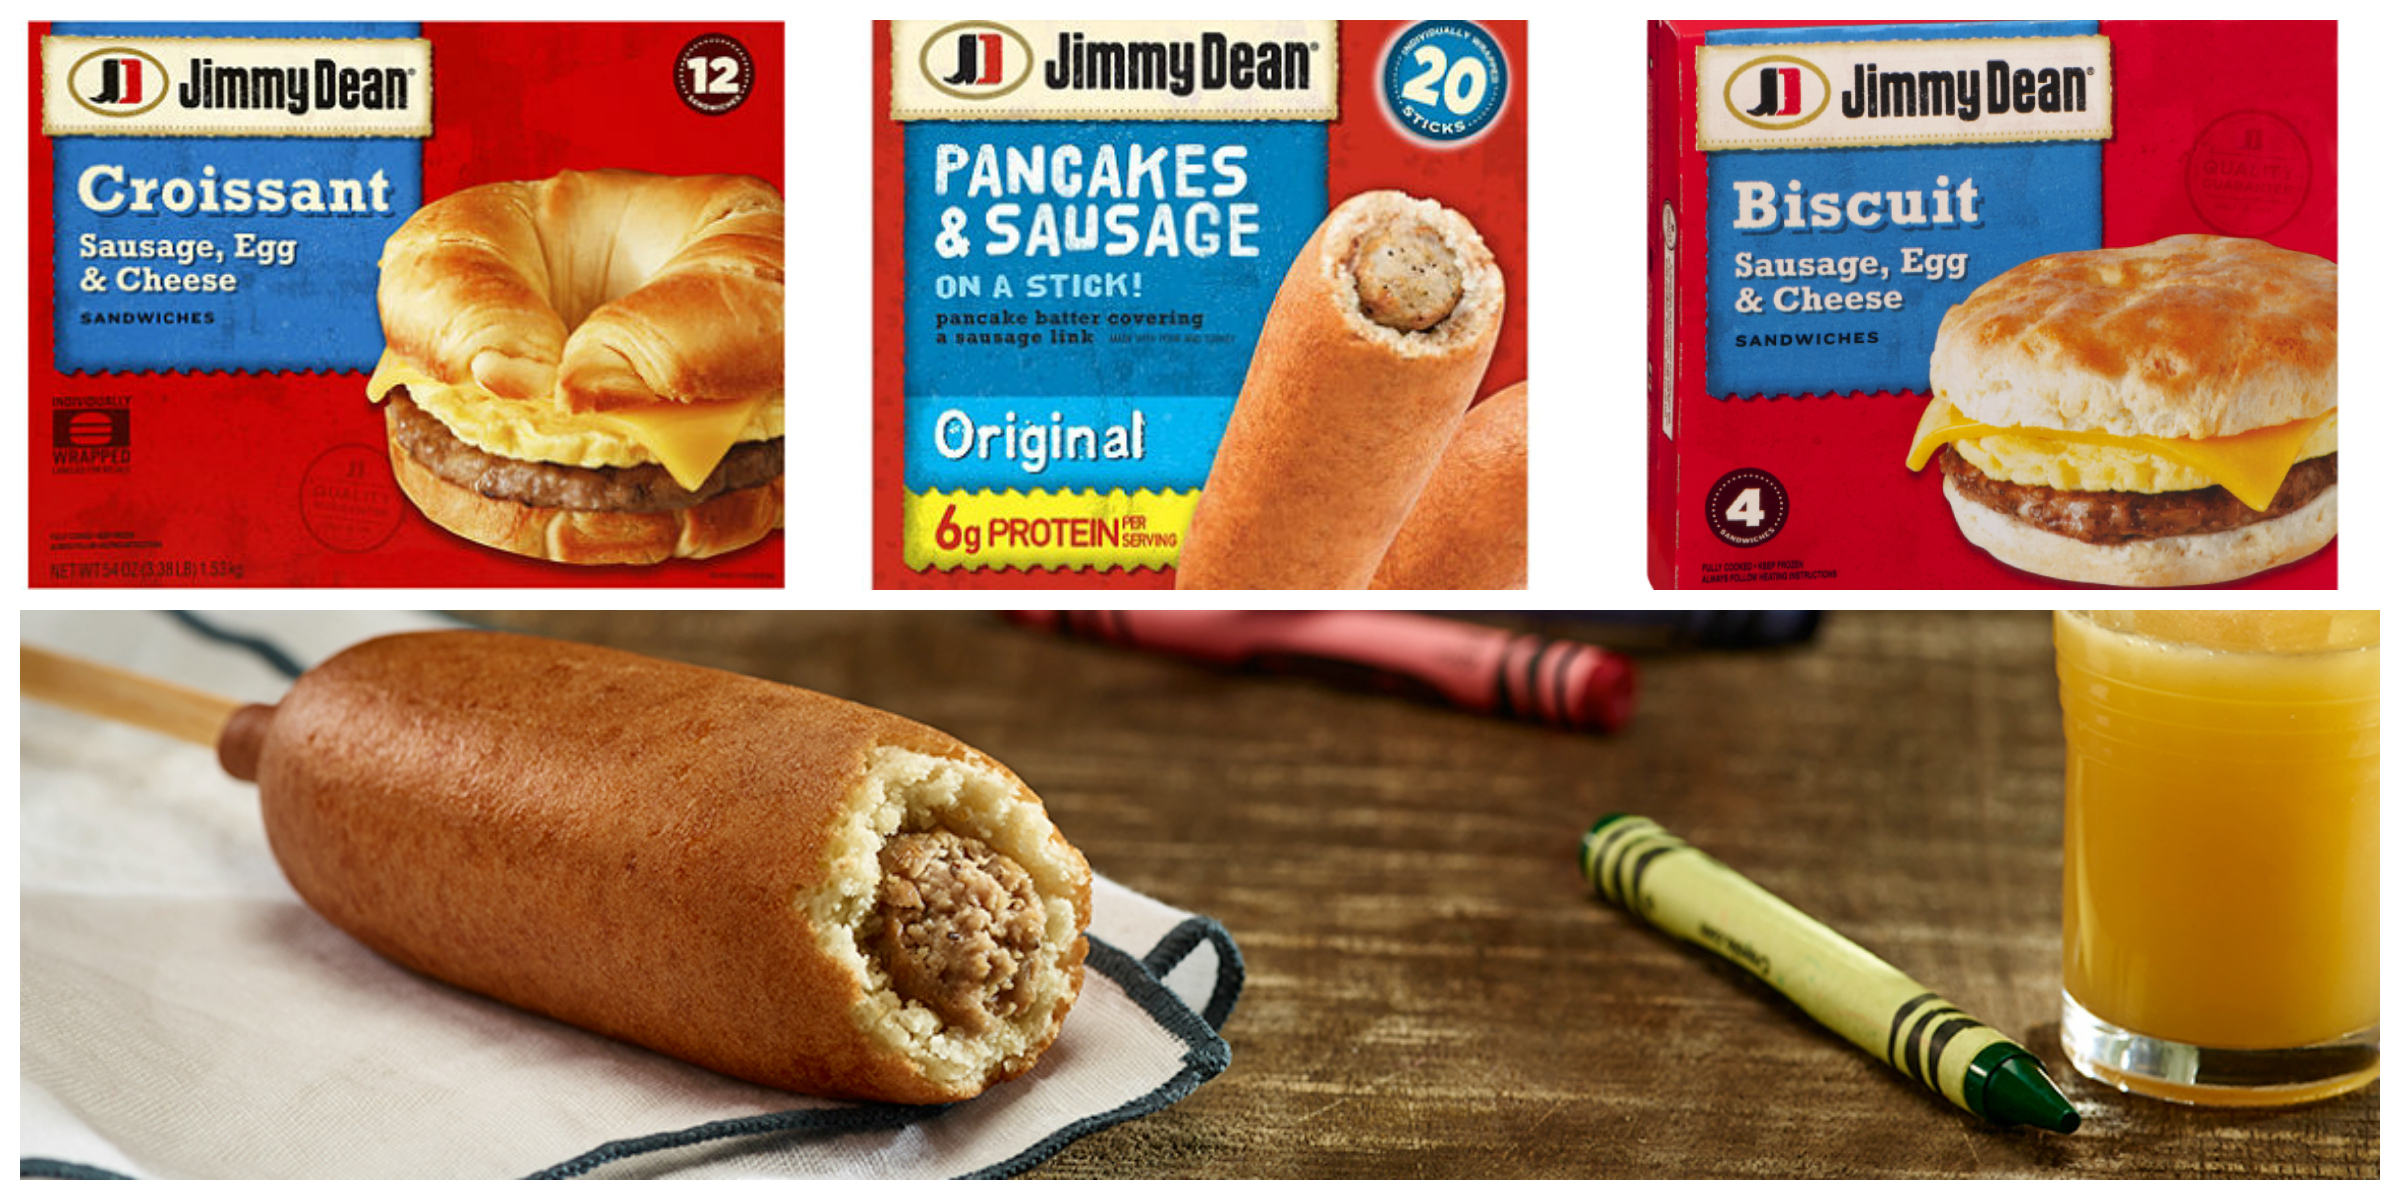 new-1-1-jimmy-dean-breakfast-sandwich-coupon-1-ibotta-rebate-only